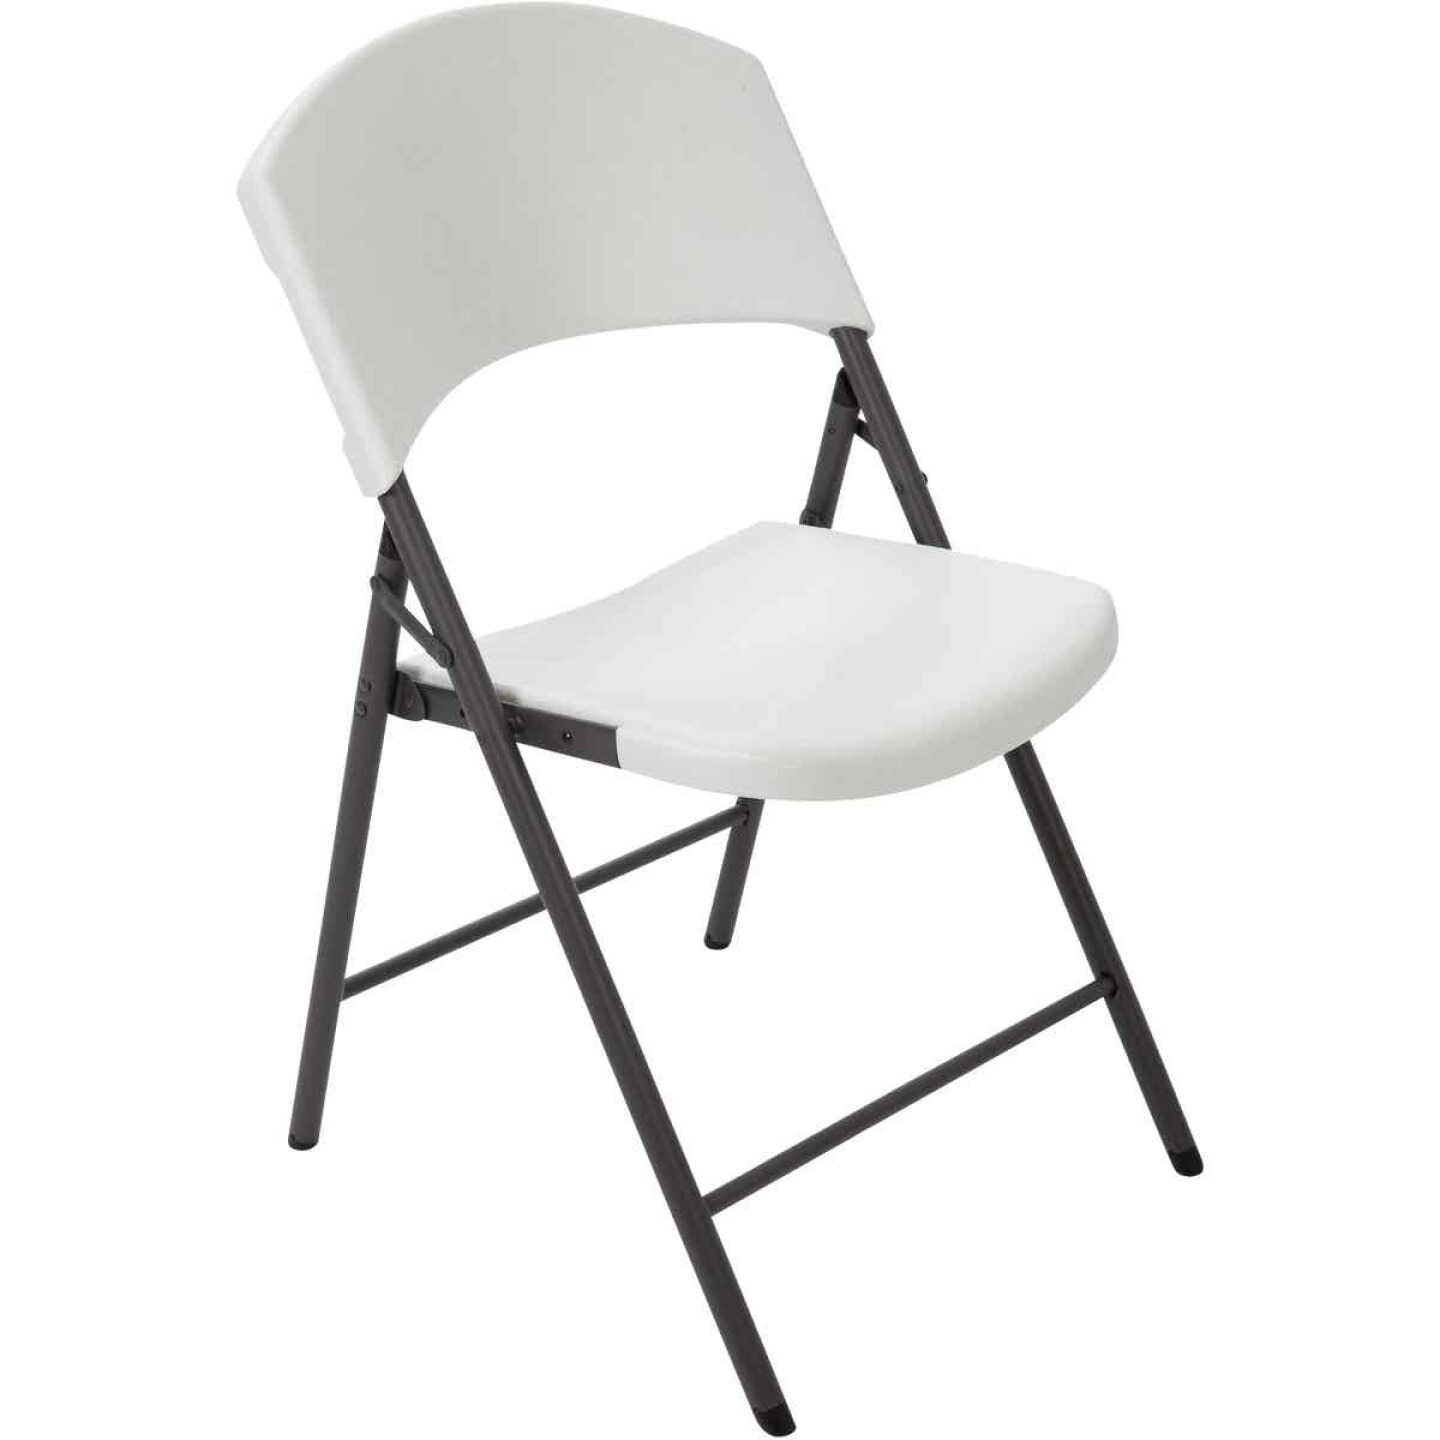 Lifetime White Granite Light Commercial Folding Chair - Power Townsend  Company